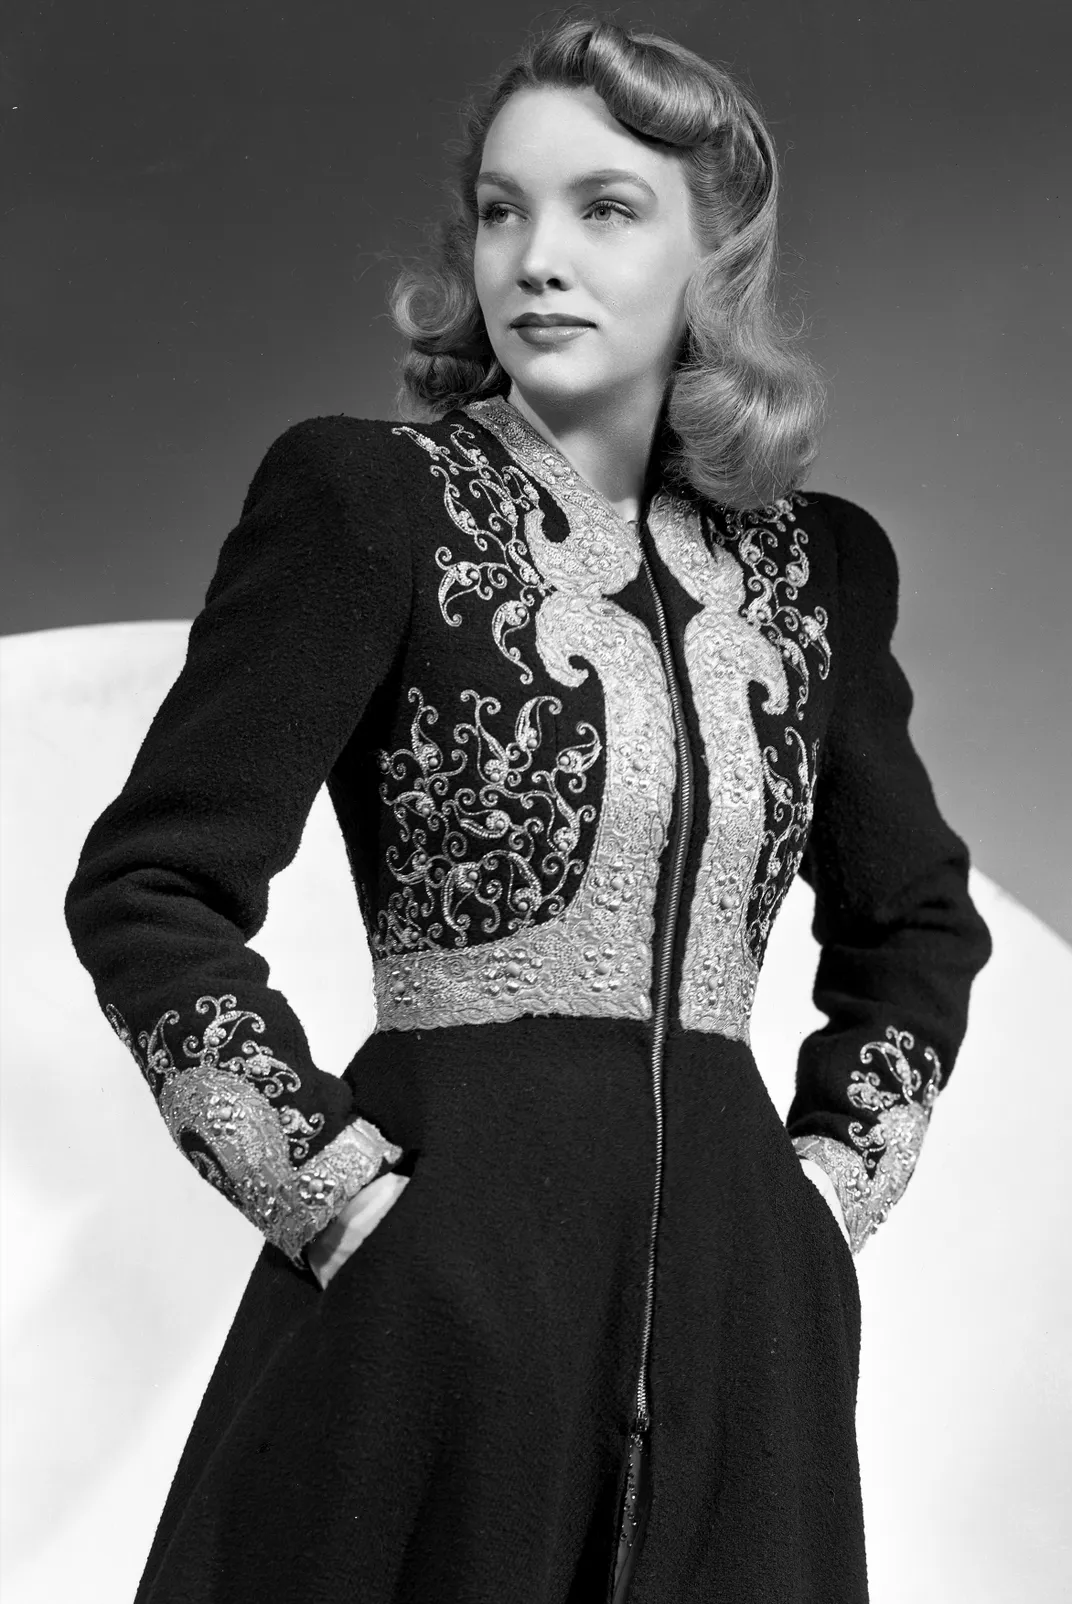 Ann Woodward in a 1940 publicity photo